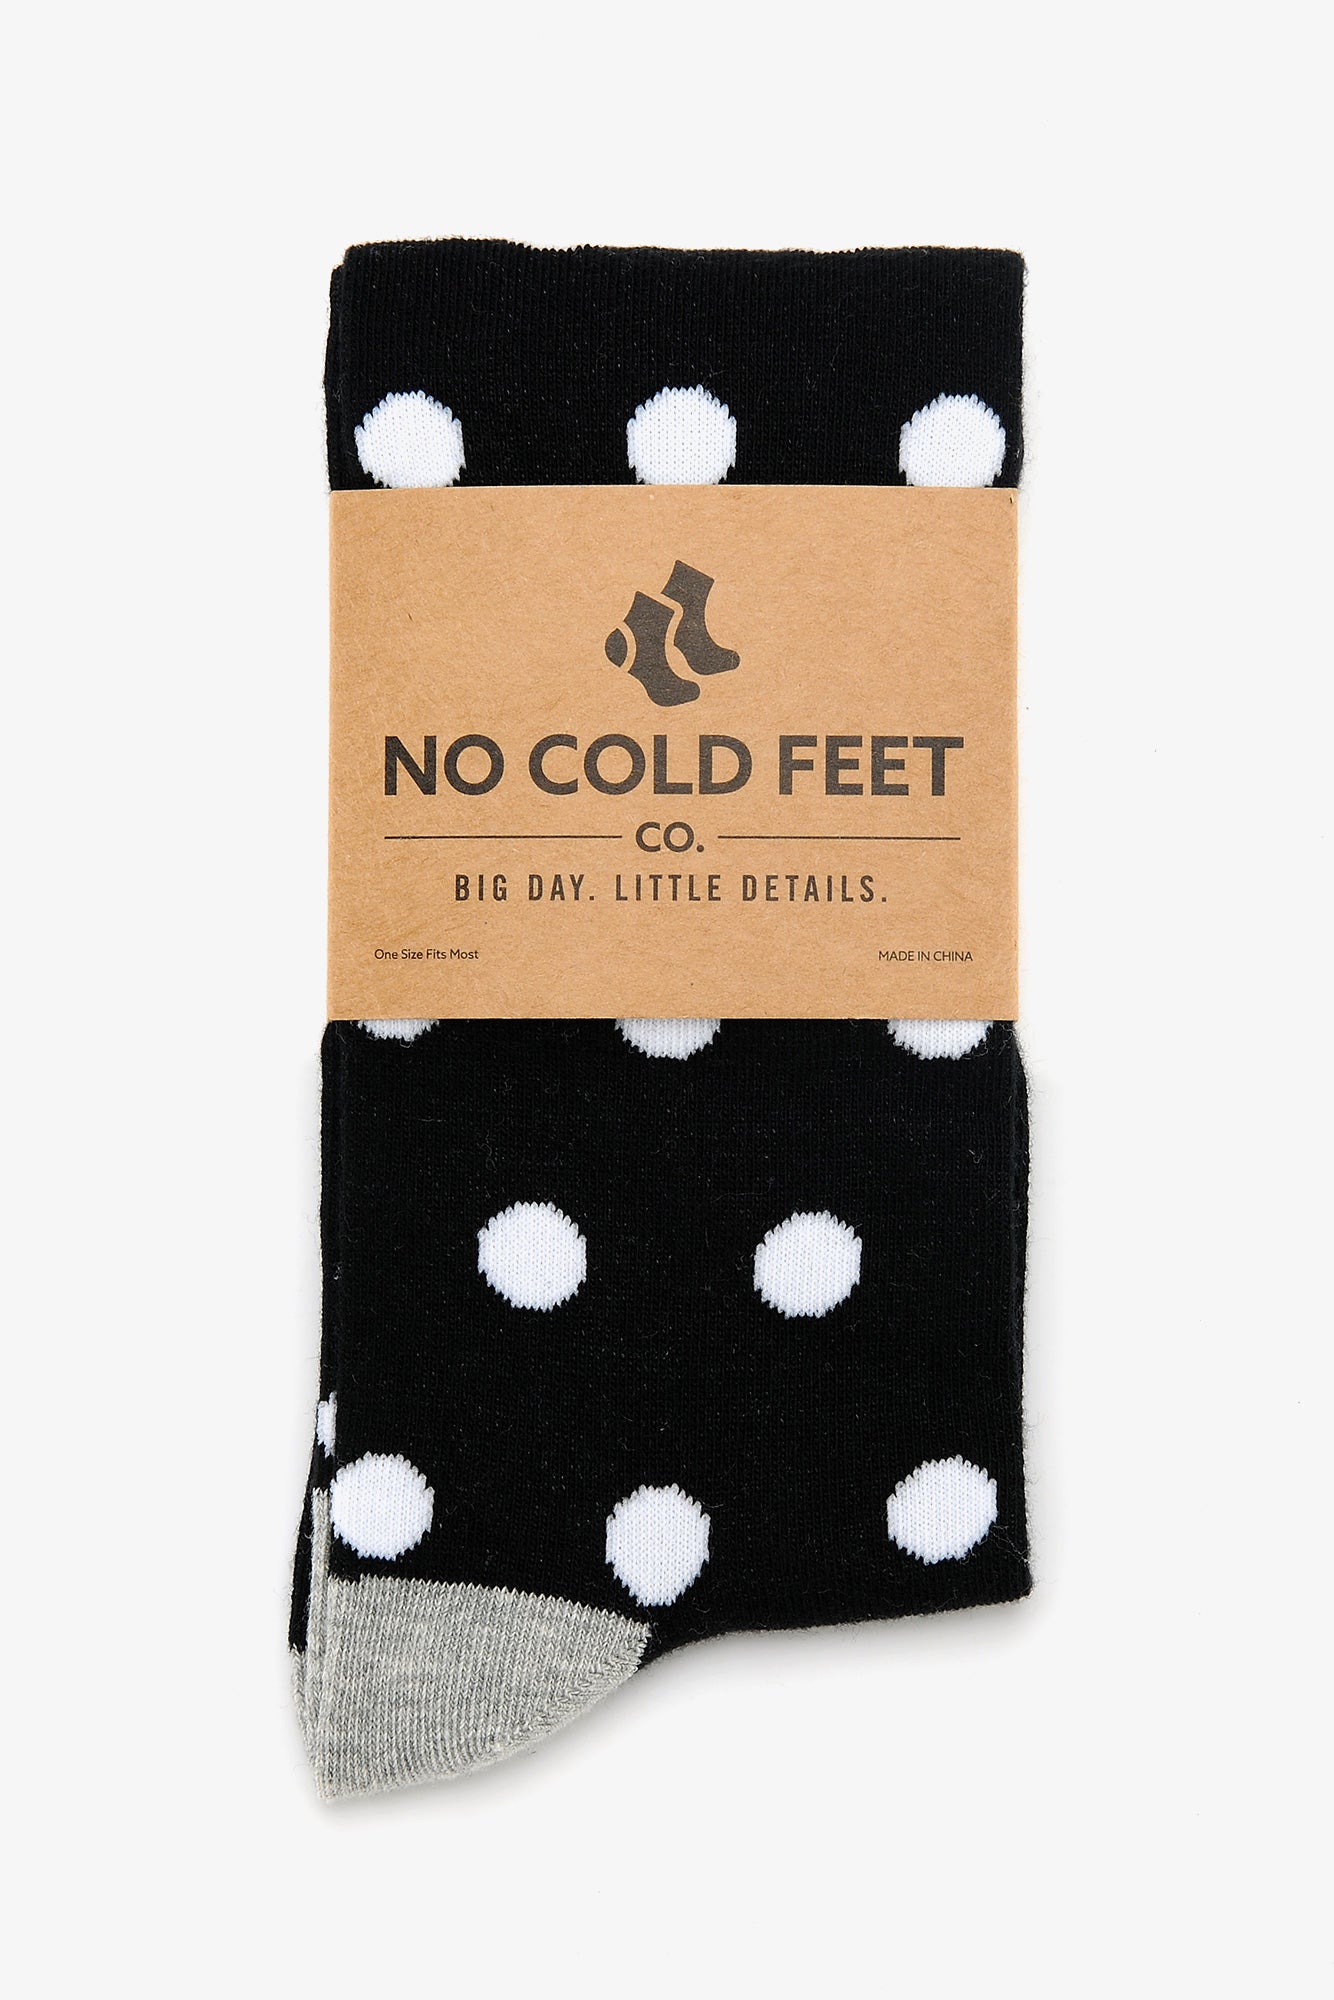 Black with White Polka Dot Groomsmen Socks by No Cold Feet